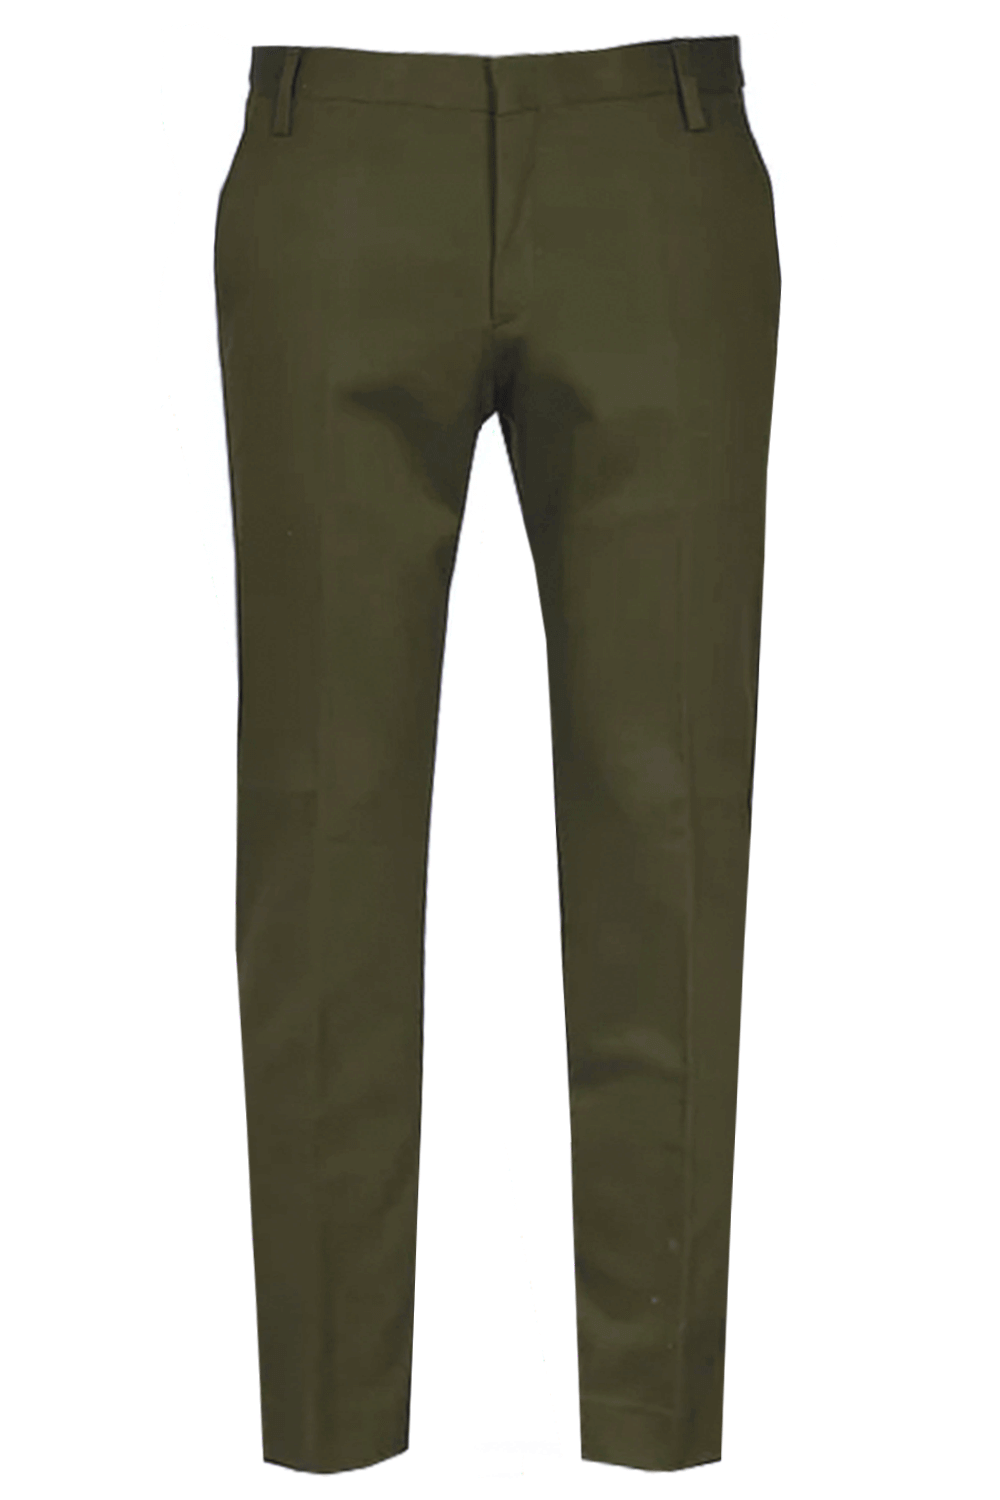 Image of Pantalone verde militare- ENTRE AMIS